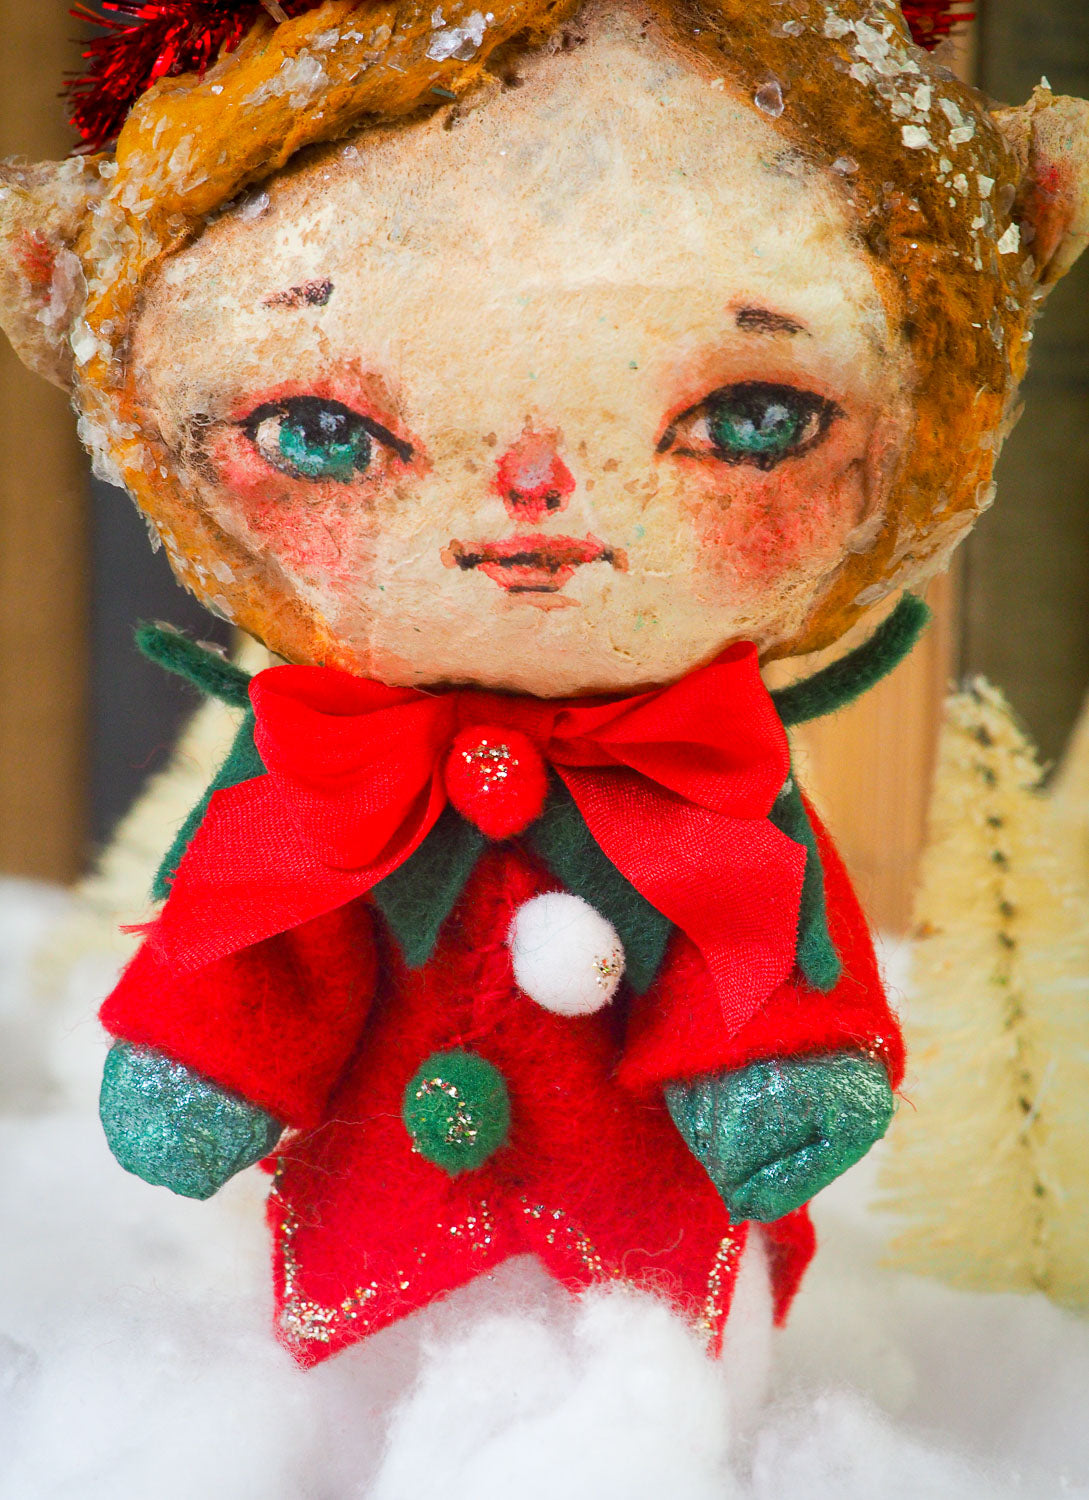 Handmade Christmas Elf tree ornament doll by Danita. Whimsical folk art spun cotton home decor figurine for Holiday season, covered in vintage mica.